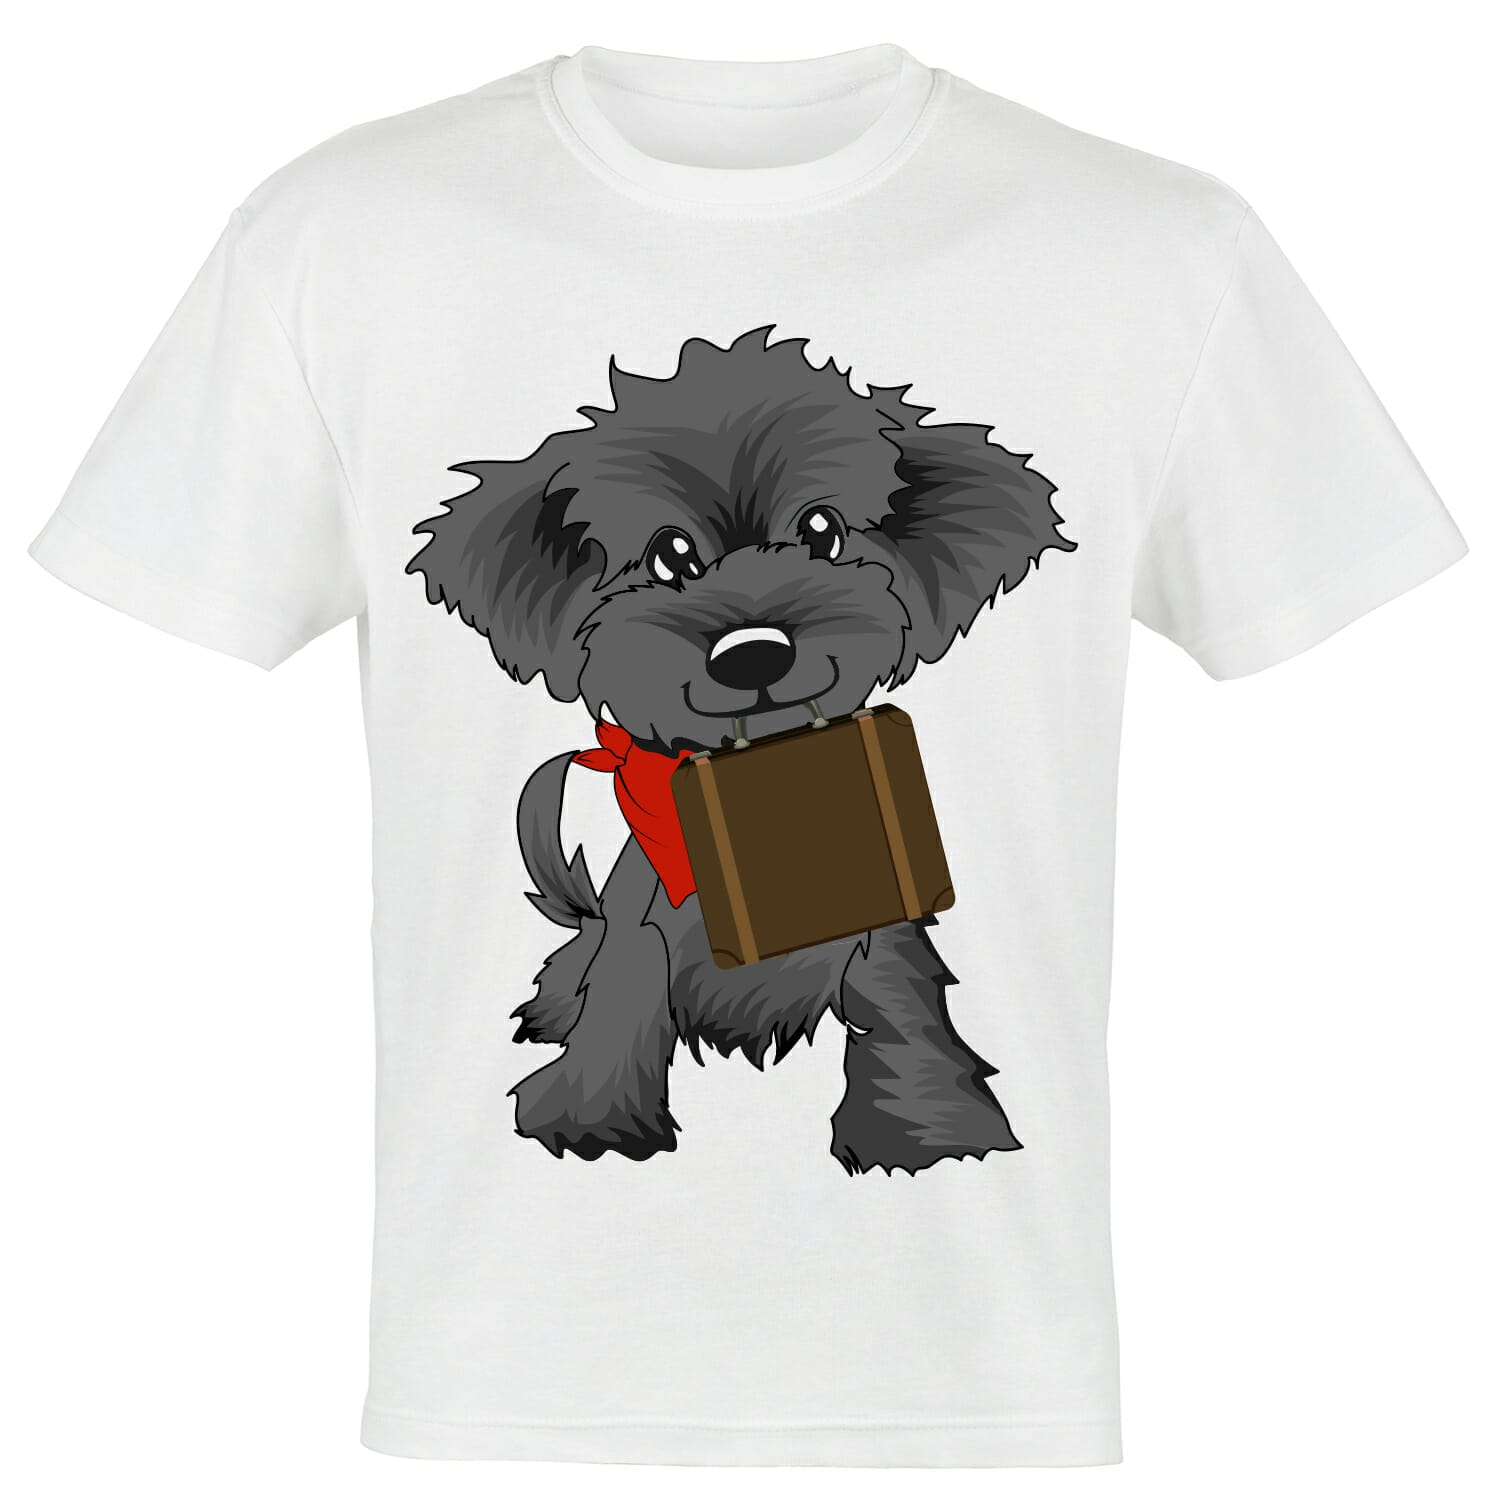 Cute Dog T-Shirt Design – Sublimation Printing Free Design